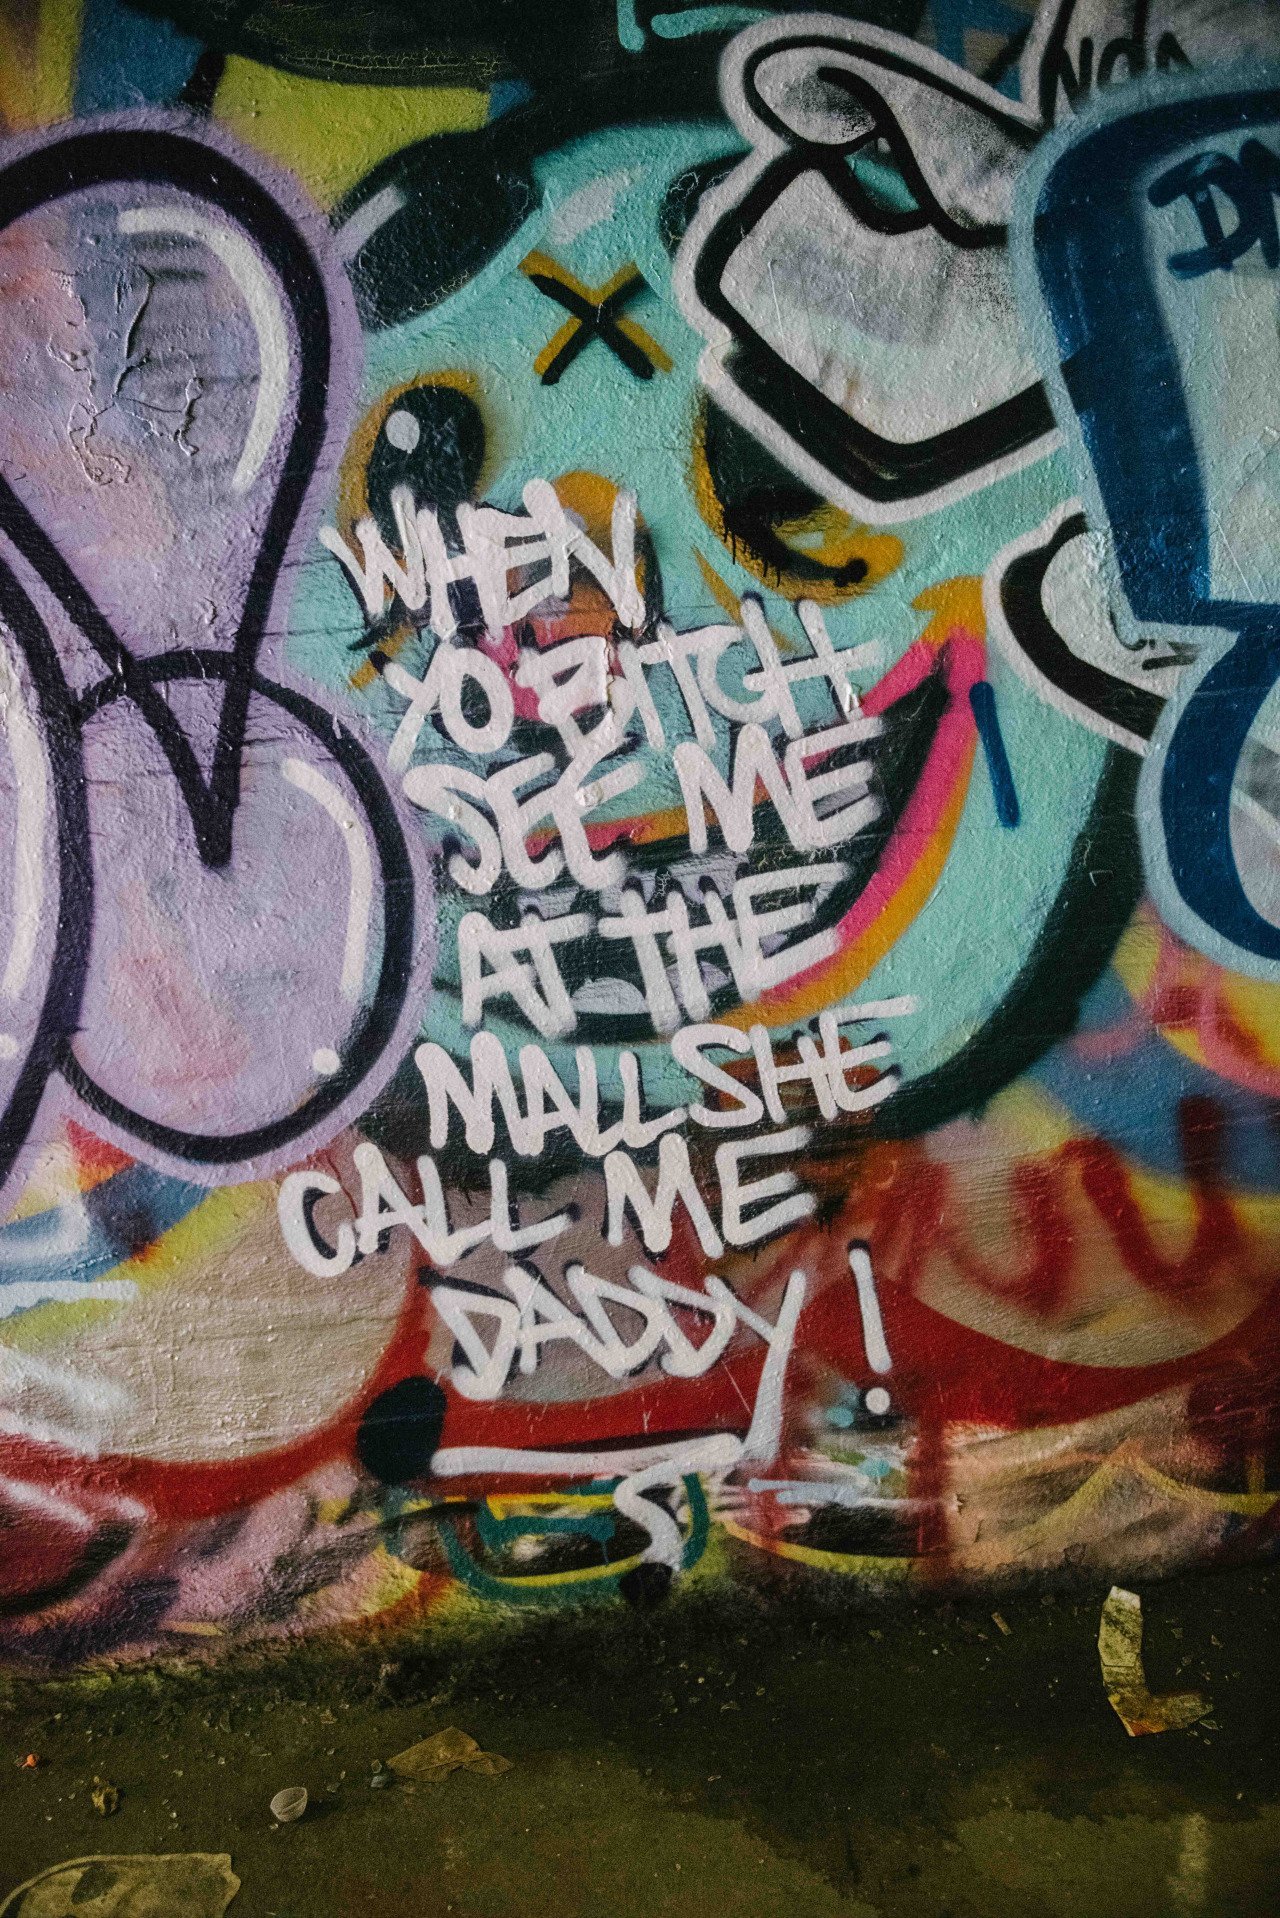 RT @ShaniaSuperlove: #streetart #graffiti #ATL #atlanta #cabbagetown #krogstreet #krogstreettunnel https://t.co/duKqR7SCtd https://goo.gl/t4fpx2